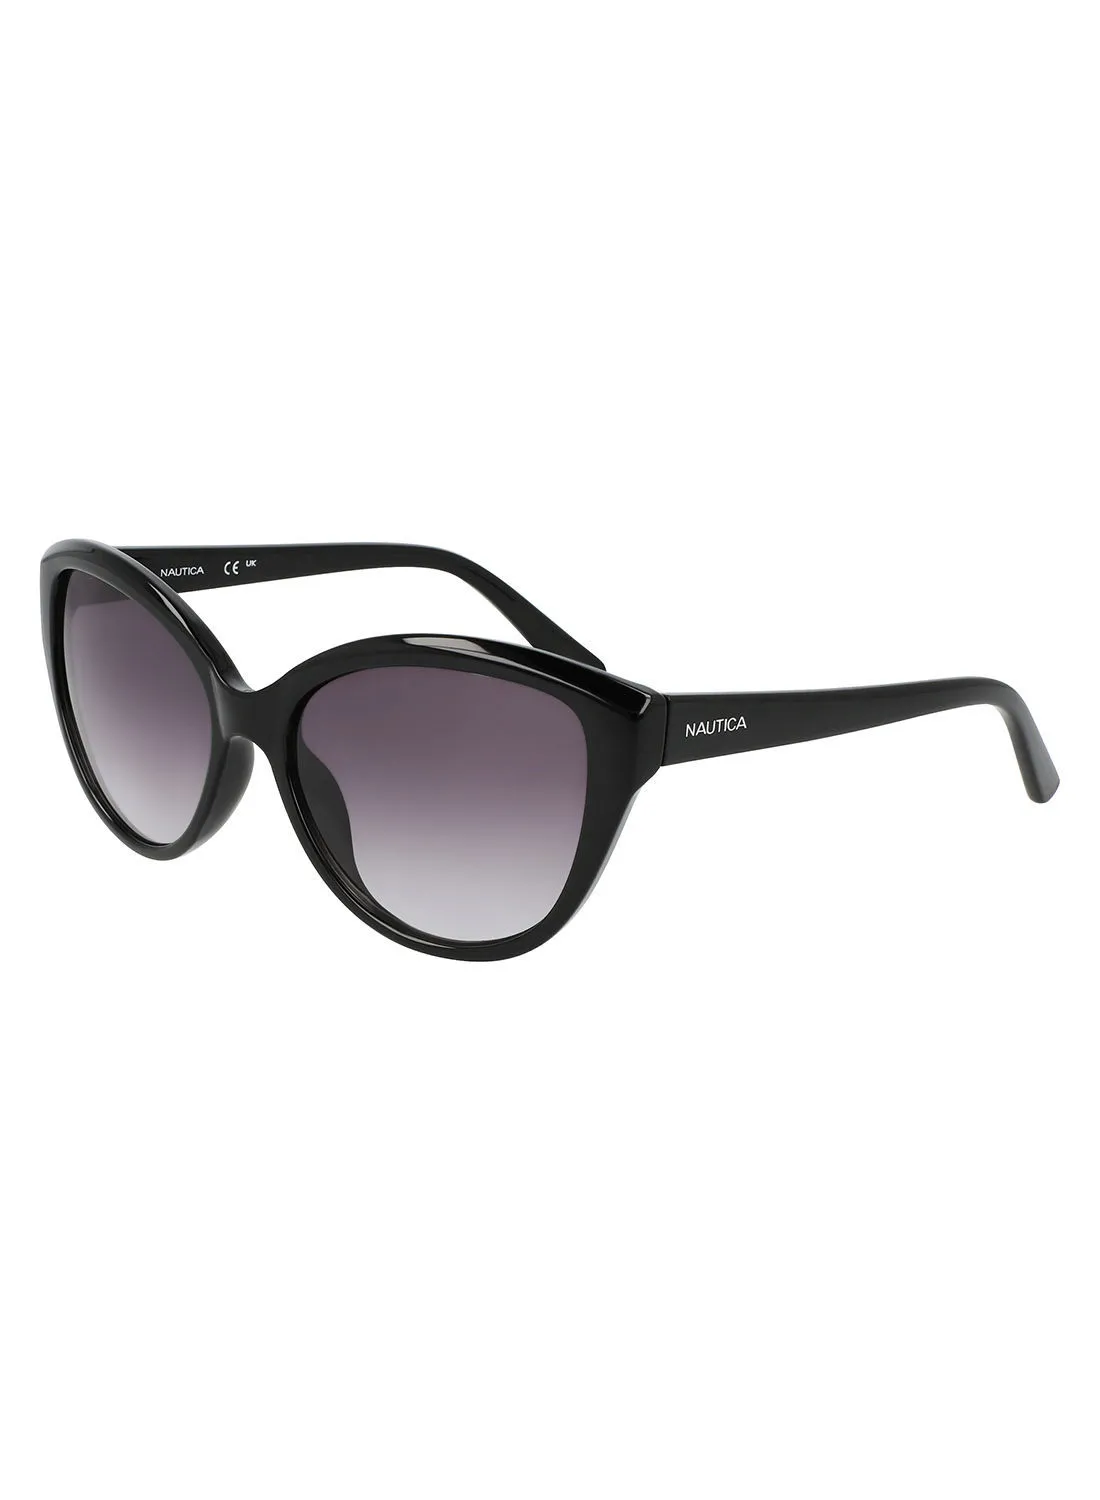 NAUTICA Women's Cat Eye Sunglasses - N2241S-001-5516 - Lens Size: 55 Mm